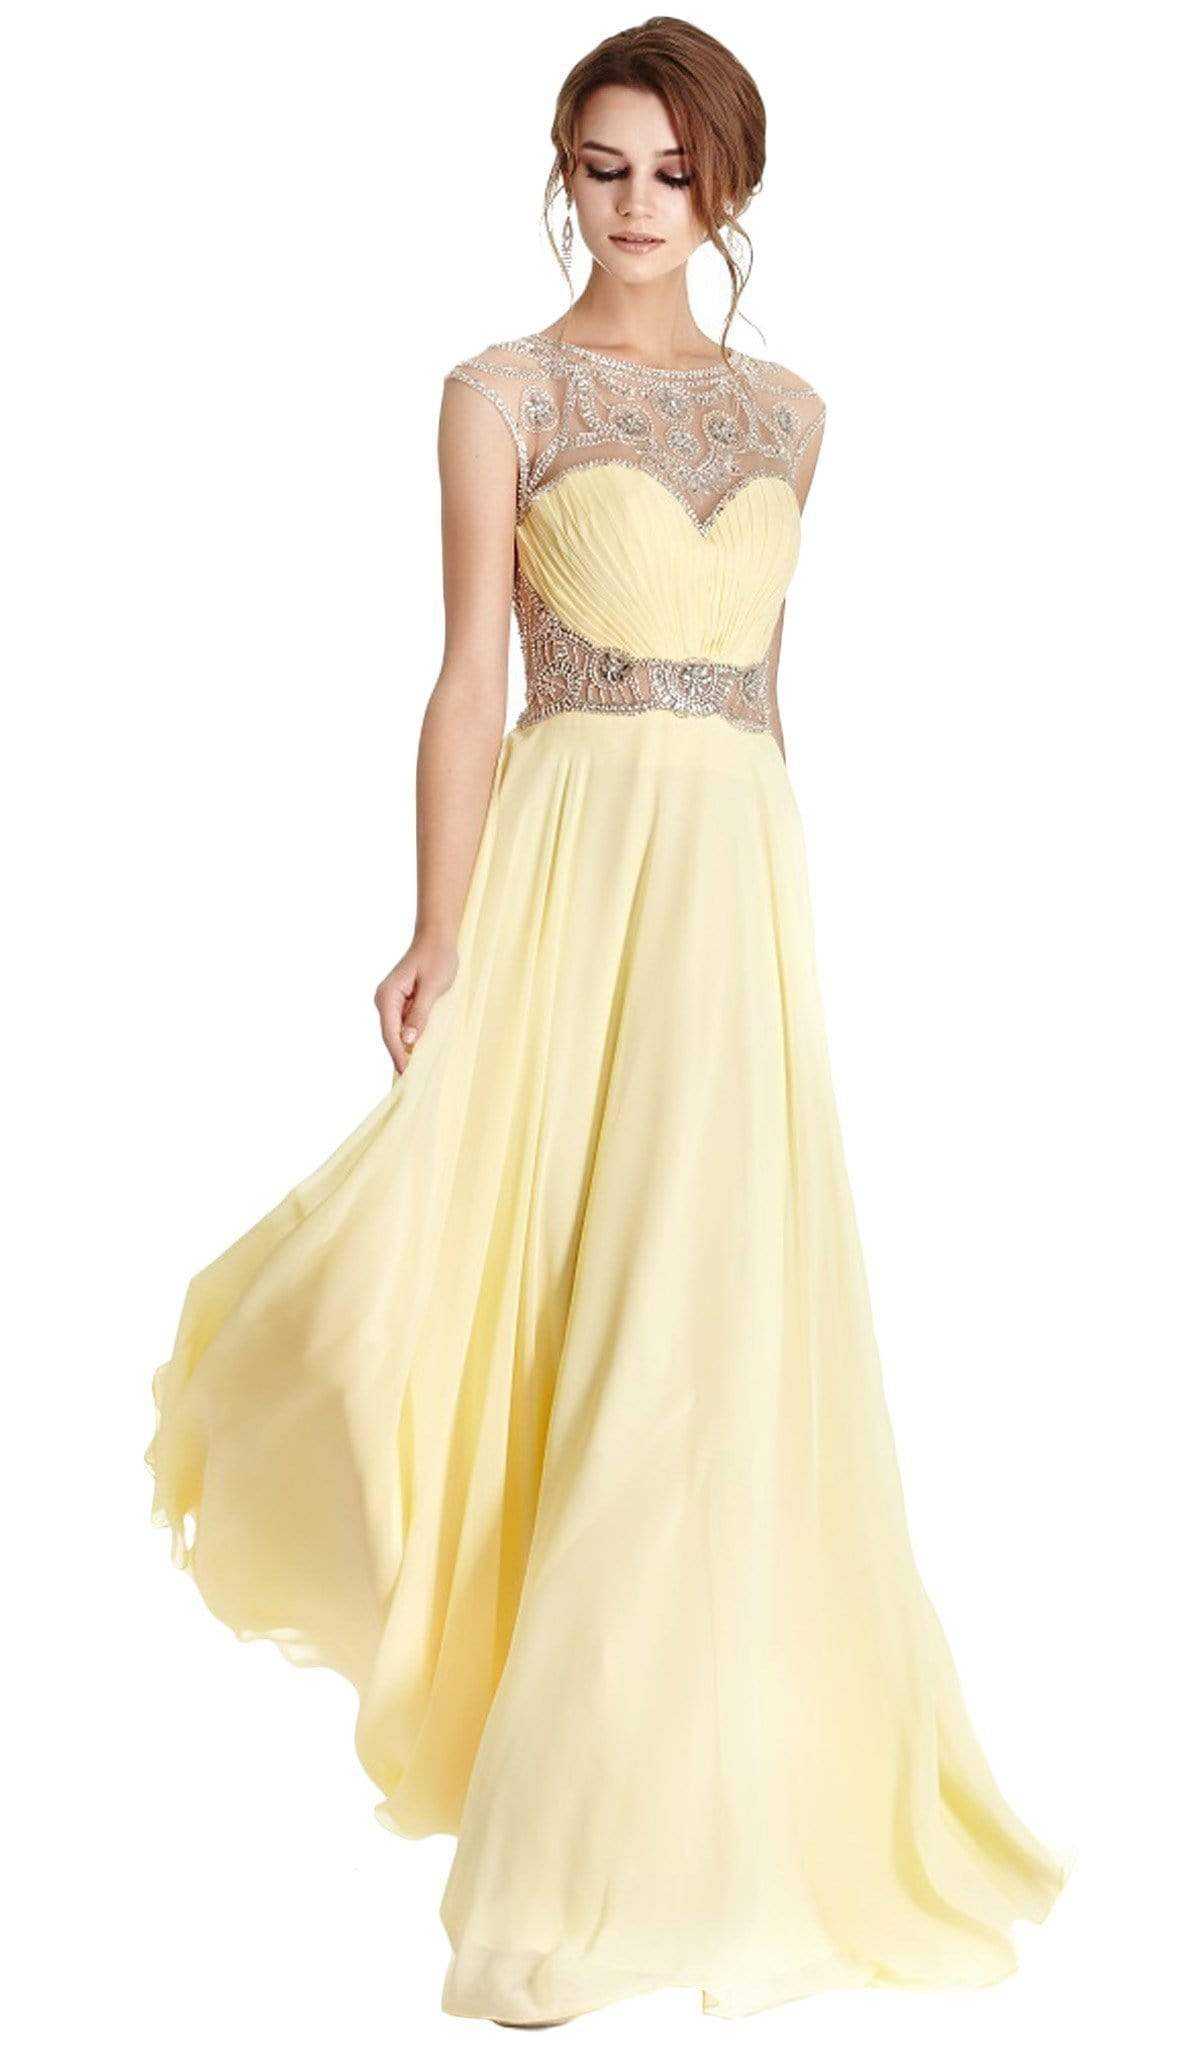 Aspeed Design, Aspeed Design - Ornate Illusion Bateau A-line Prom Dress